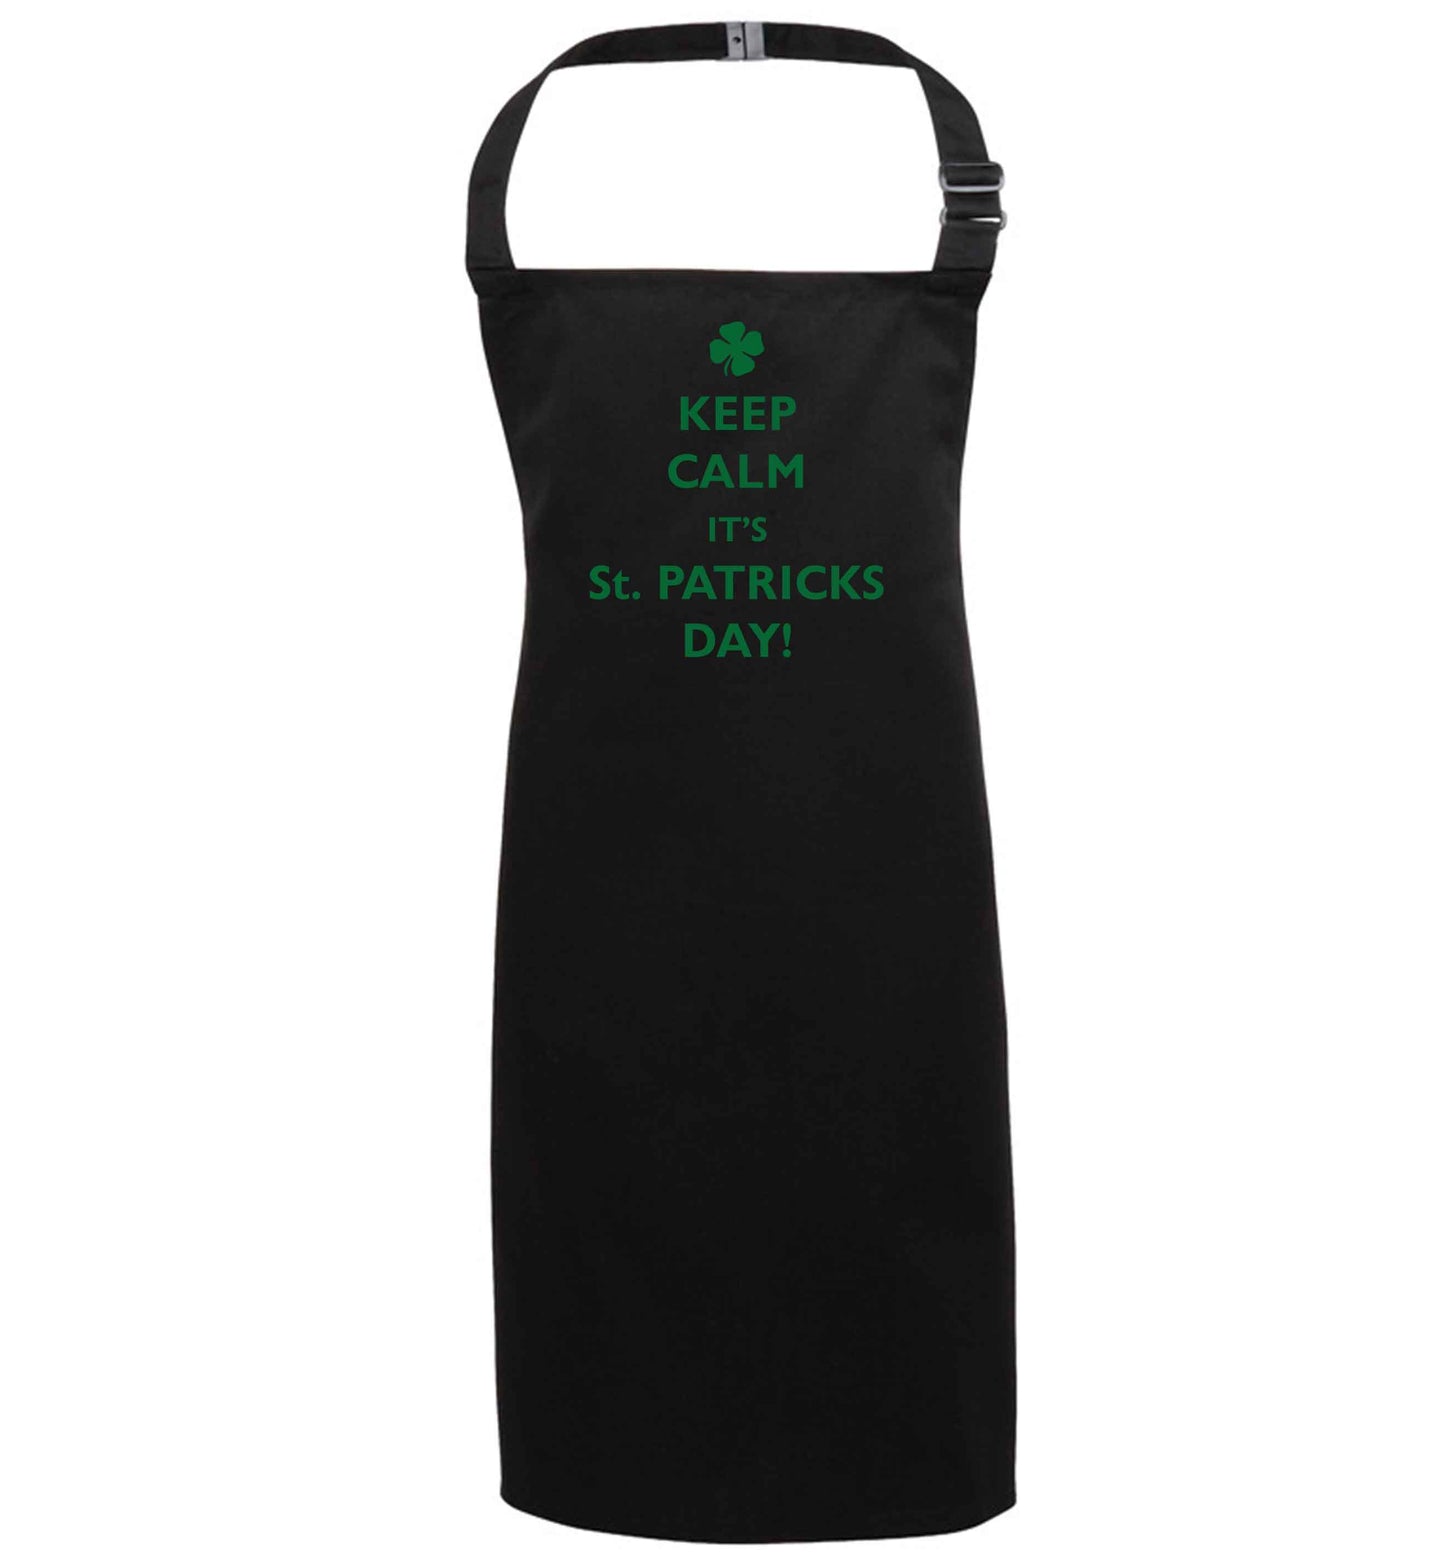 Keep calm it's St.Patricks day black apron 7-10 years